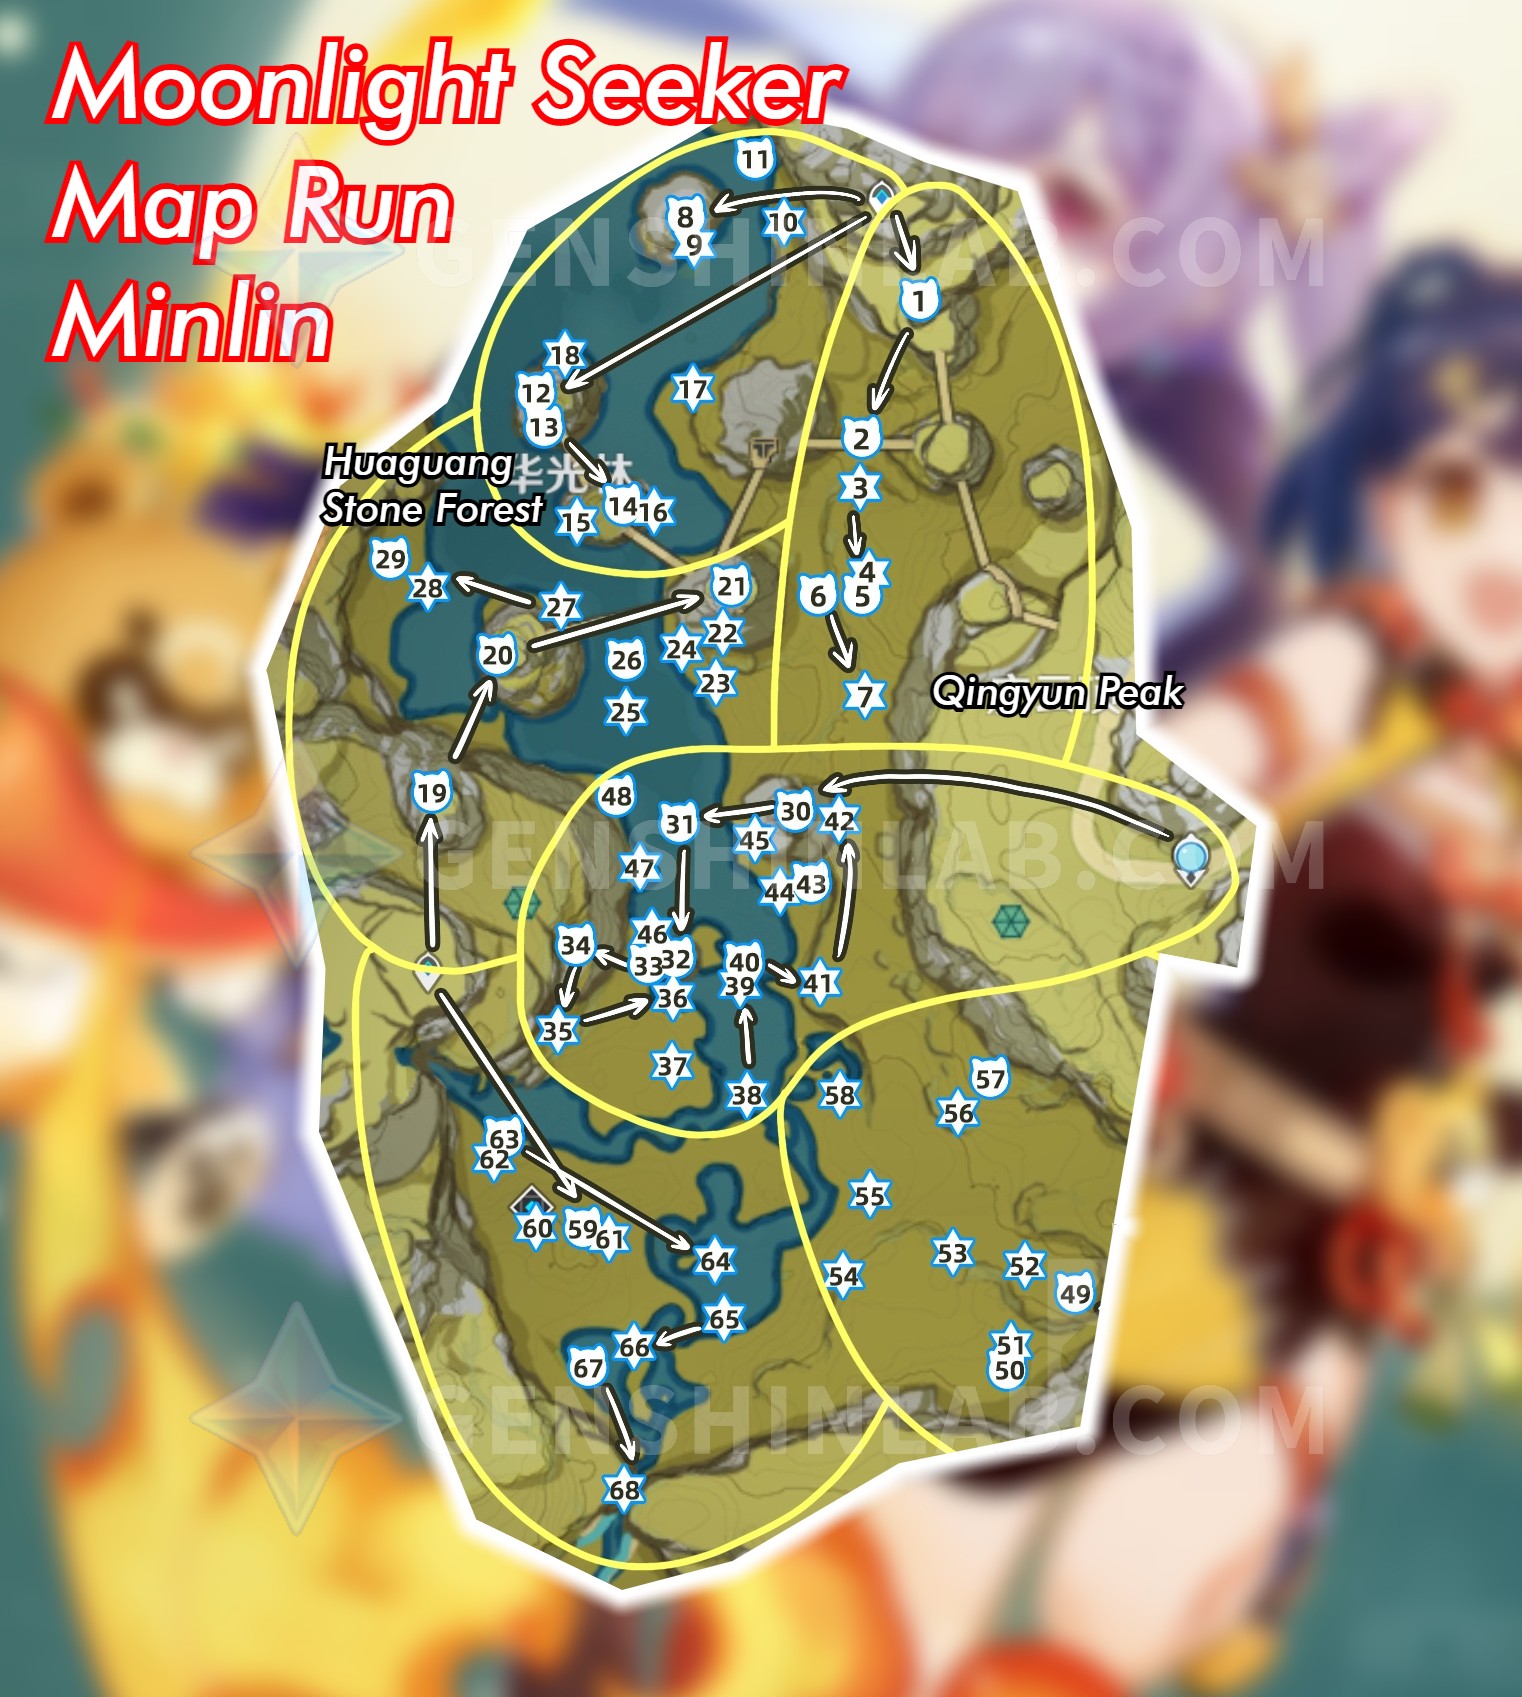 Minlin Moonlight Seeker Map Run